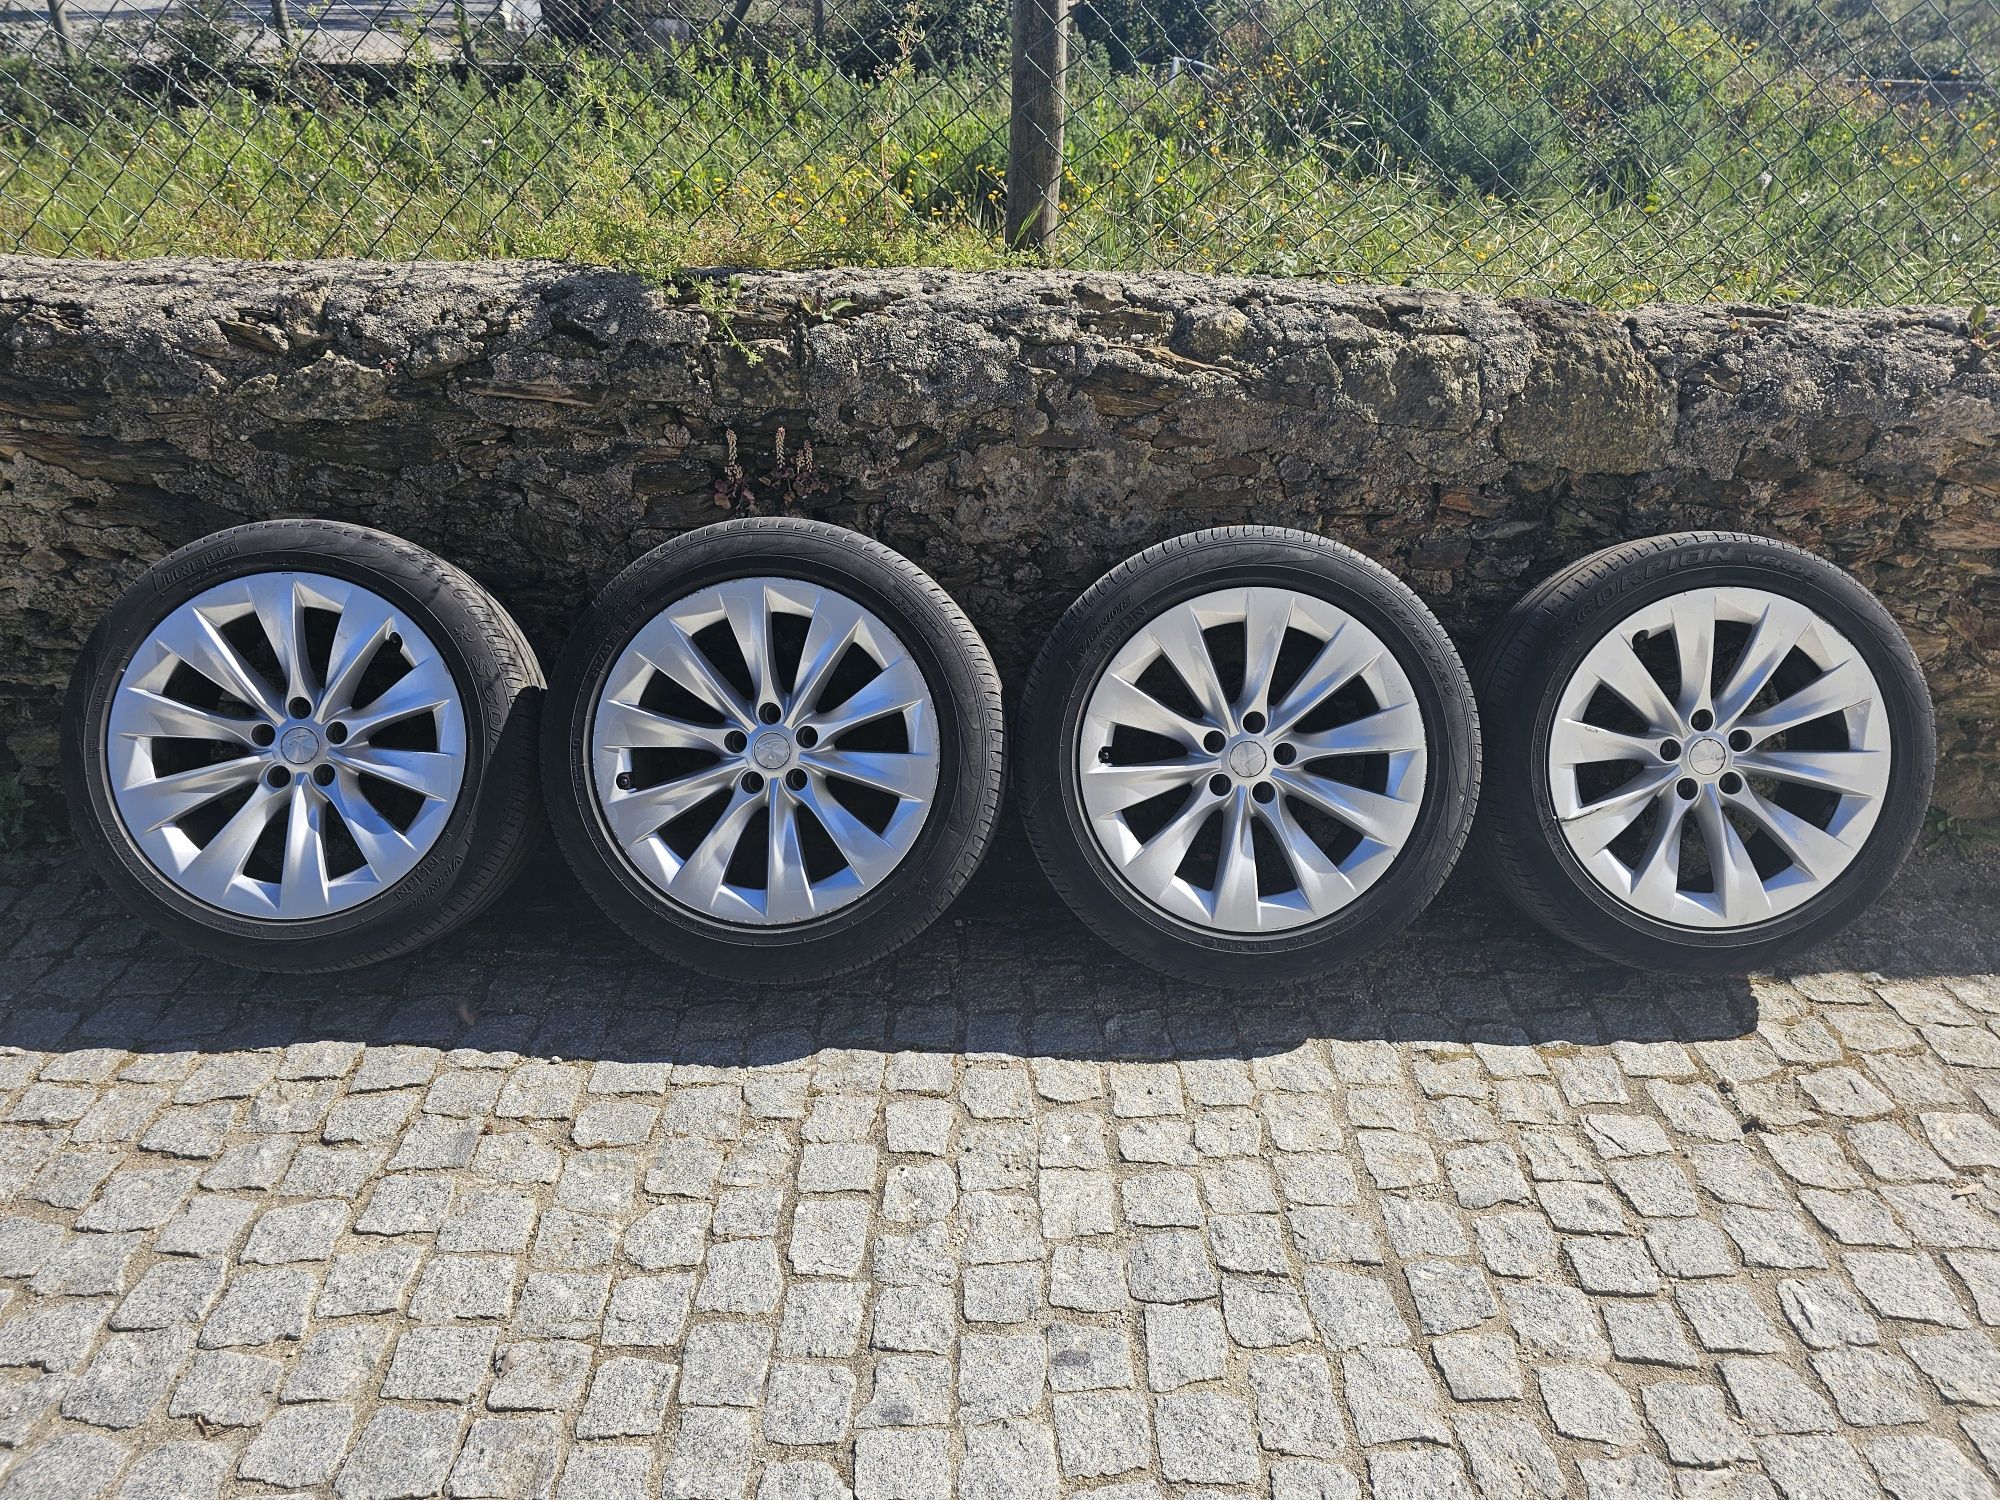 Jantes 20 5×120 Tesla BMW Mini com pneus Pireli
Possíve